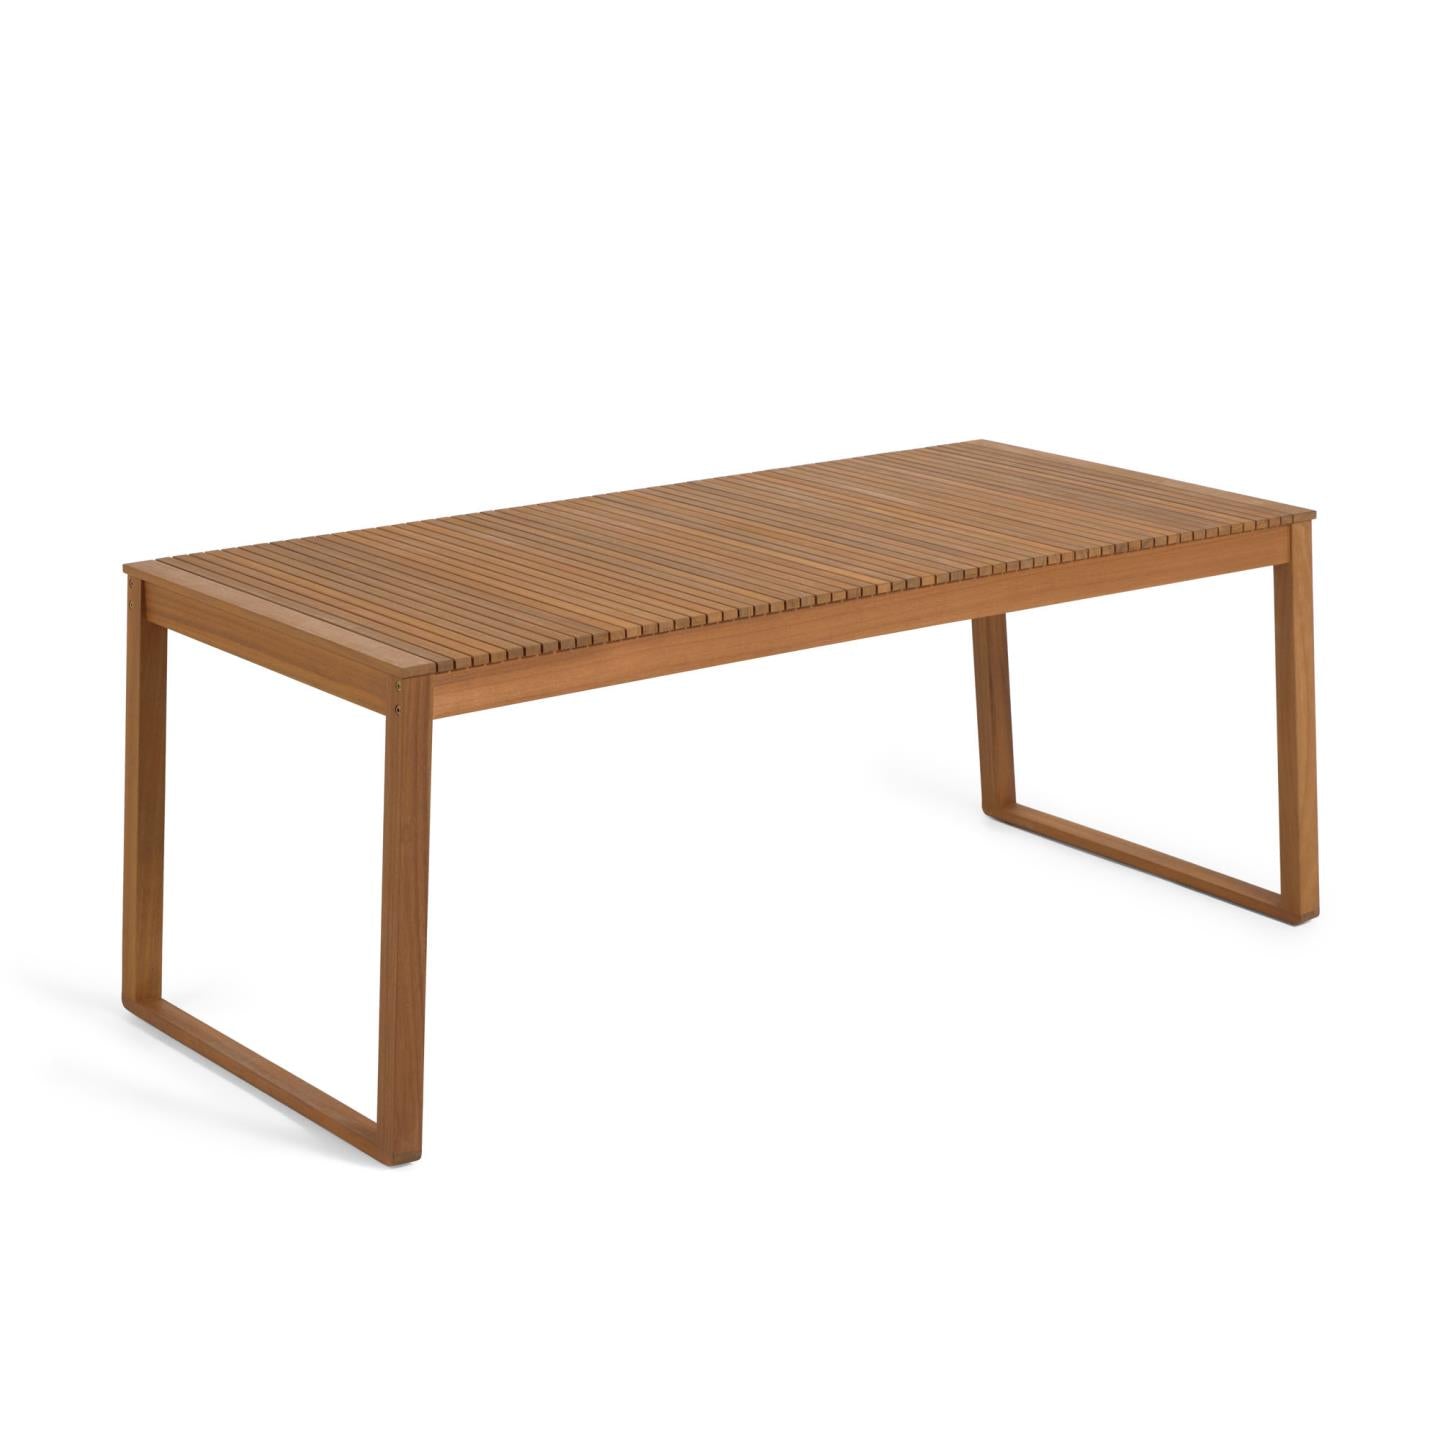 Emili solid acacia garden table, 180 x 90 cm FSC 100%